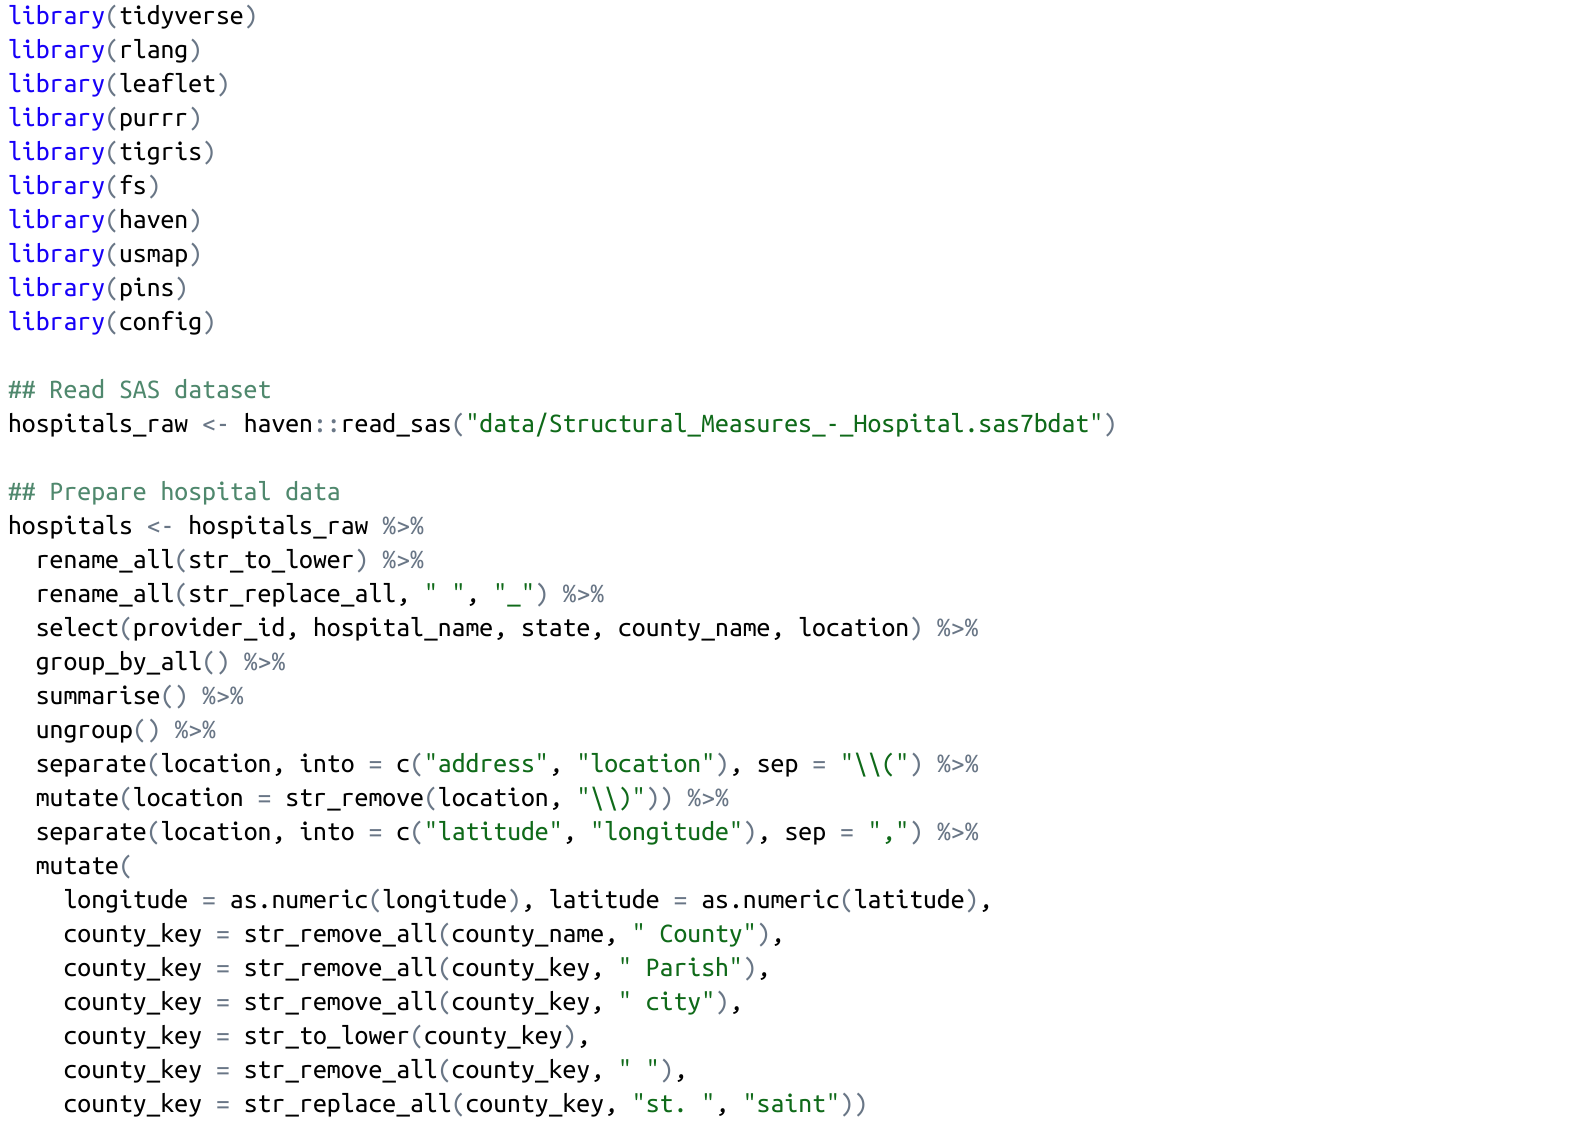 Screenshot of data preparation script